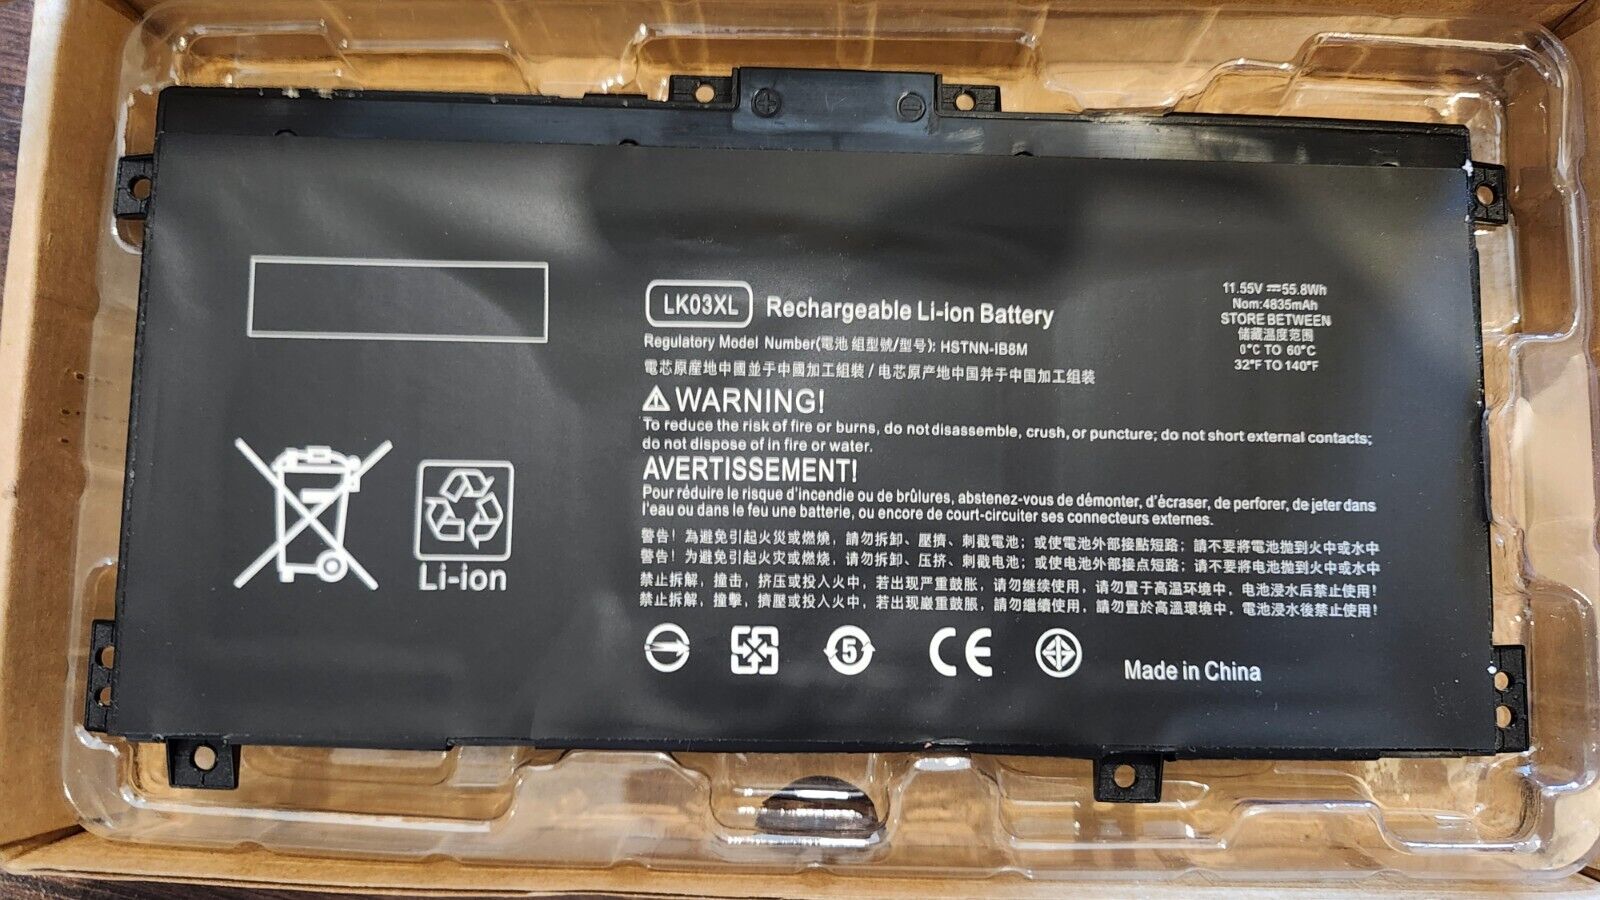 11.55V Laptop Rechargeable Li-ion Battery LK03XL 52.5Wh HSTNN-IB8M for HP ENVY